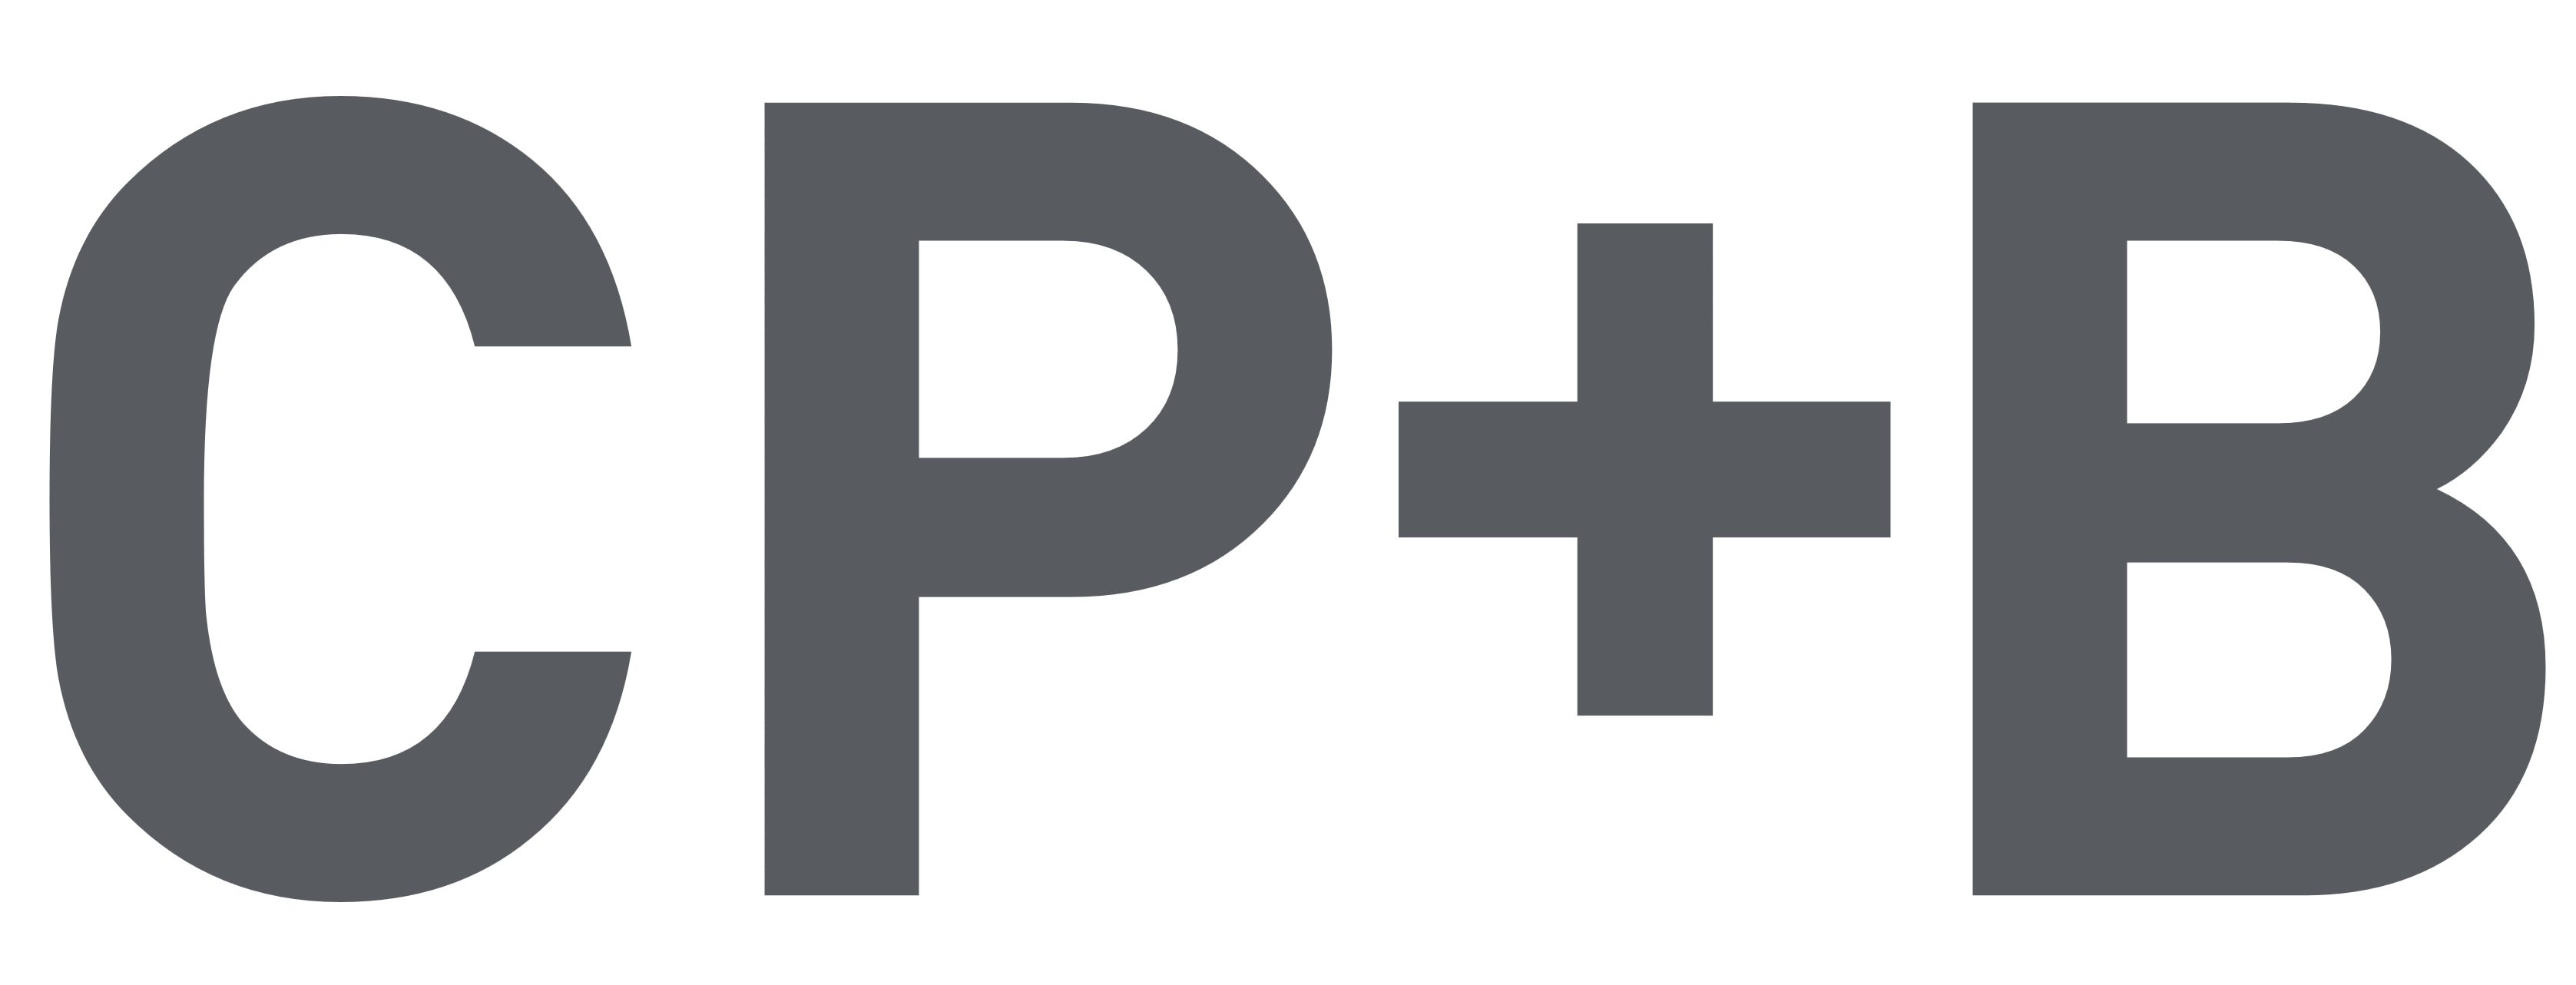 Porter Logo - CP+B (Crispin Porter + Bogusky) – Logos Download